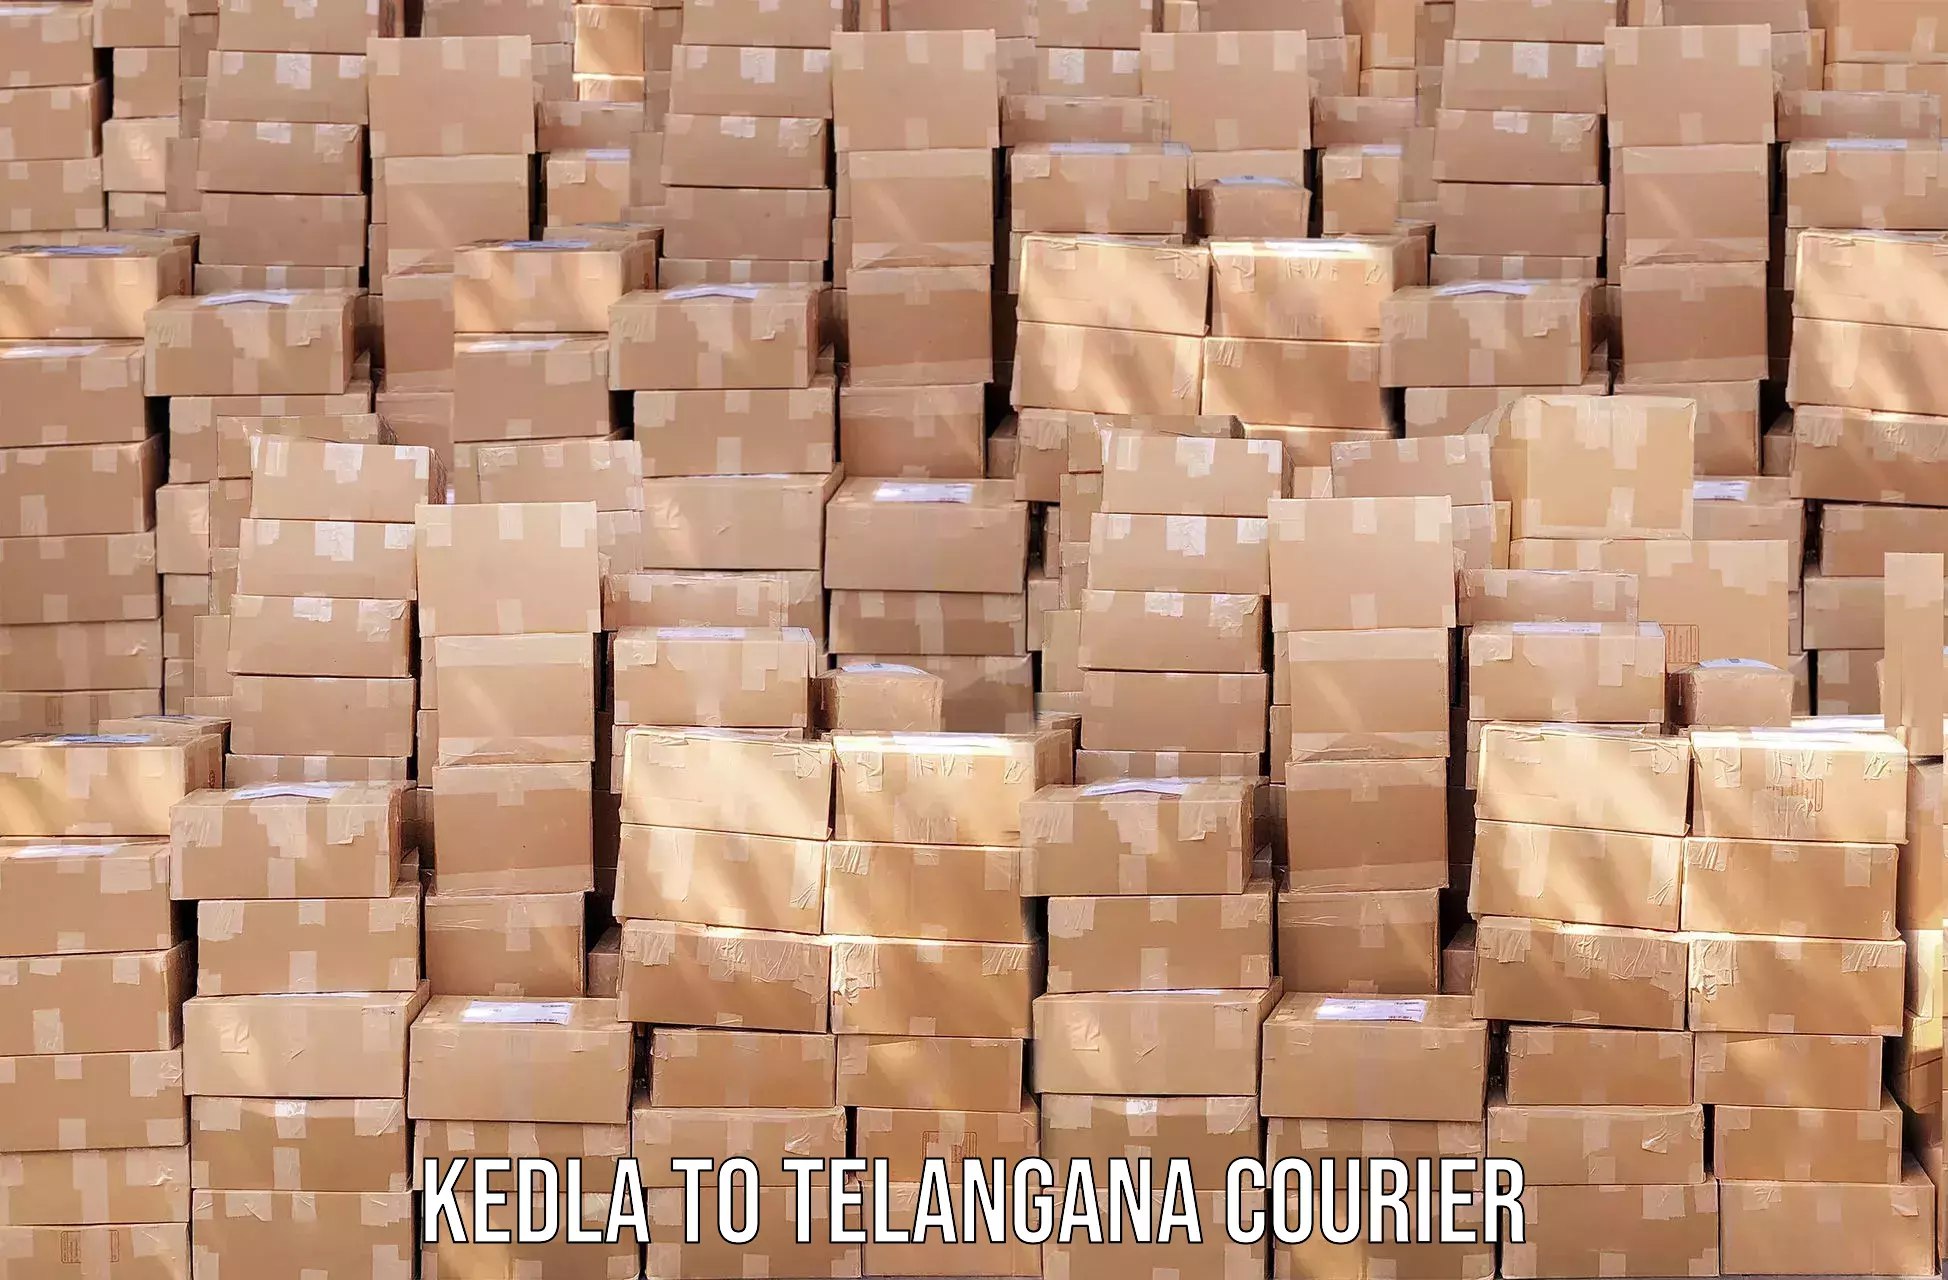 Courier service comparison Kedla to Alair